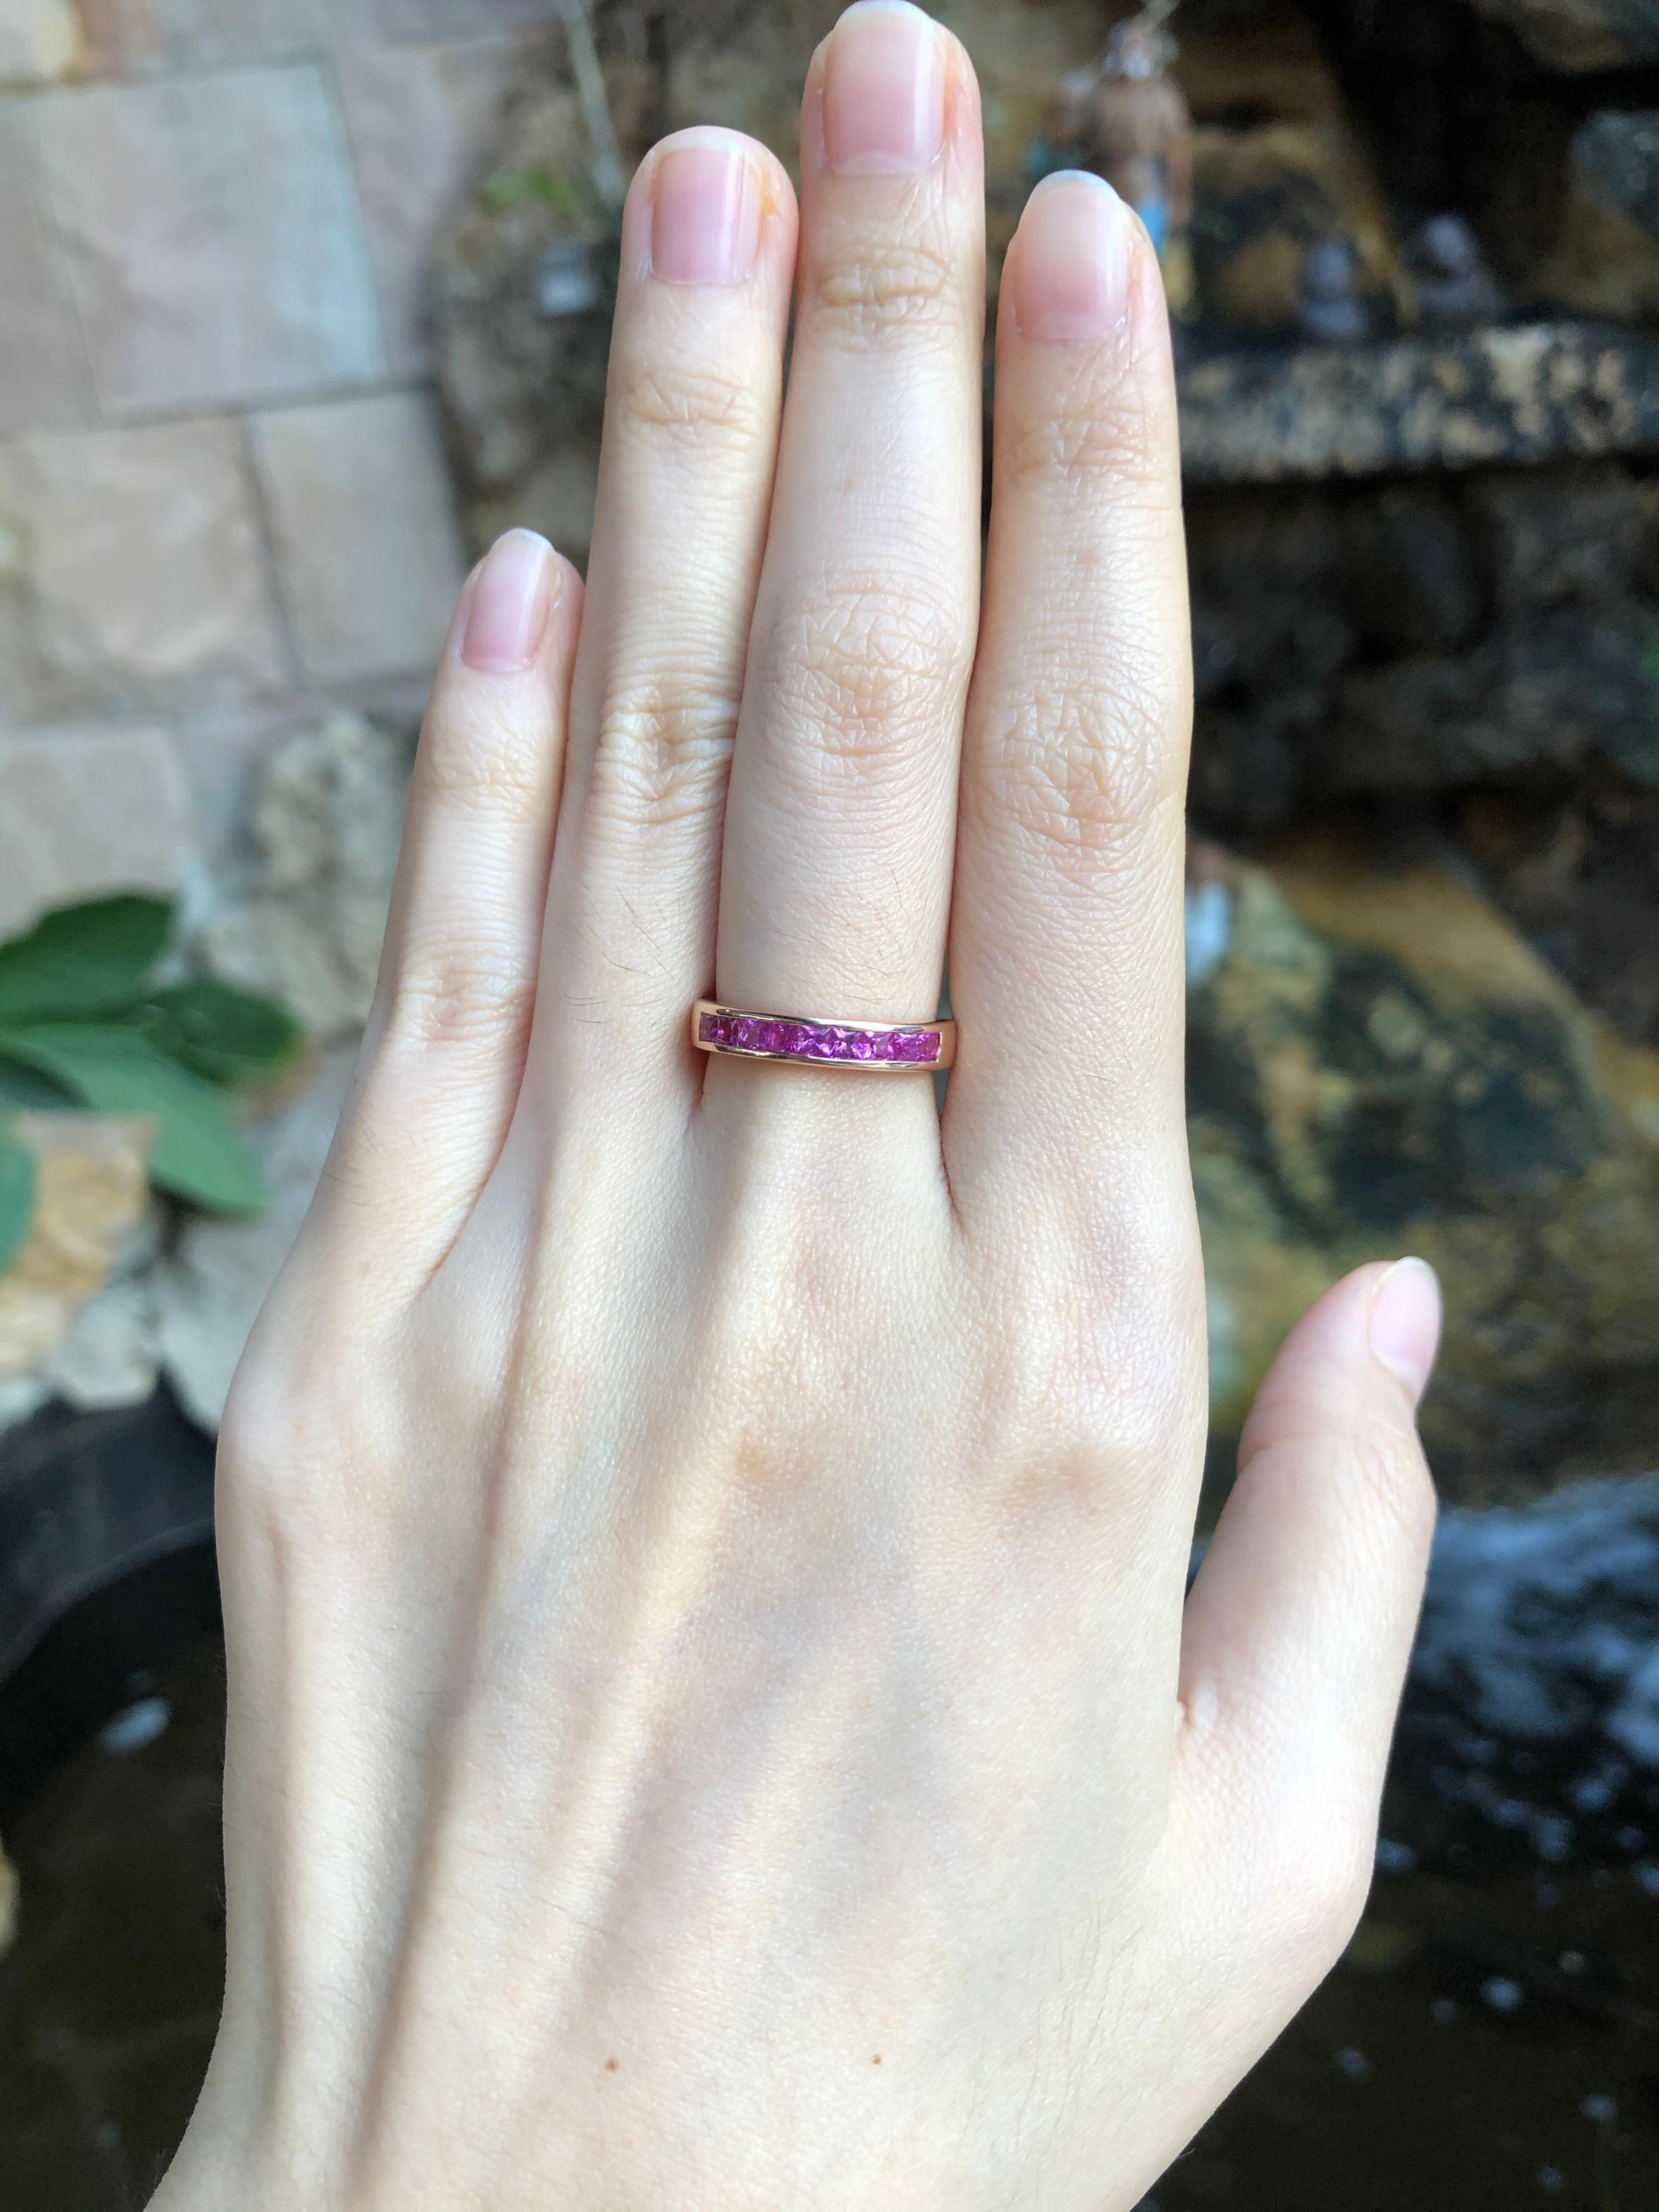 Pink Sapphire 0.82 carat Ring set in 18 Karat Rose Gold Settings

Width:  1.7 cm 
Length: 0.3 cm
Ring Size: 51
Total Weight: 4.0 grams

